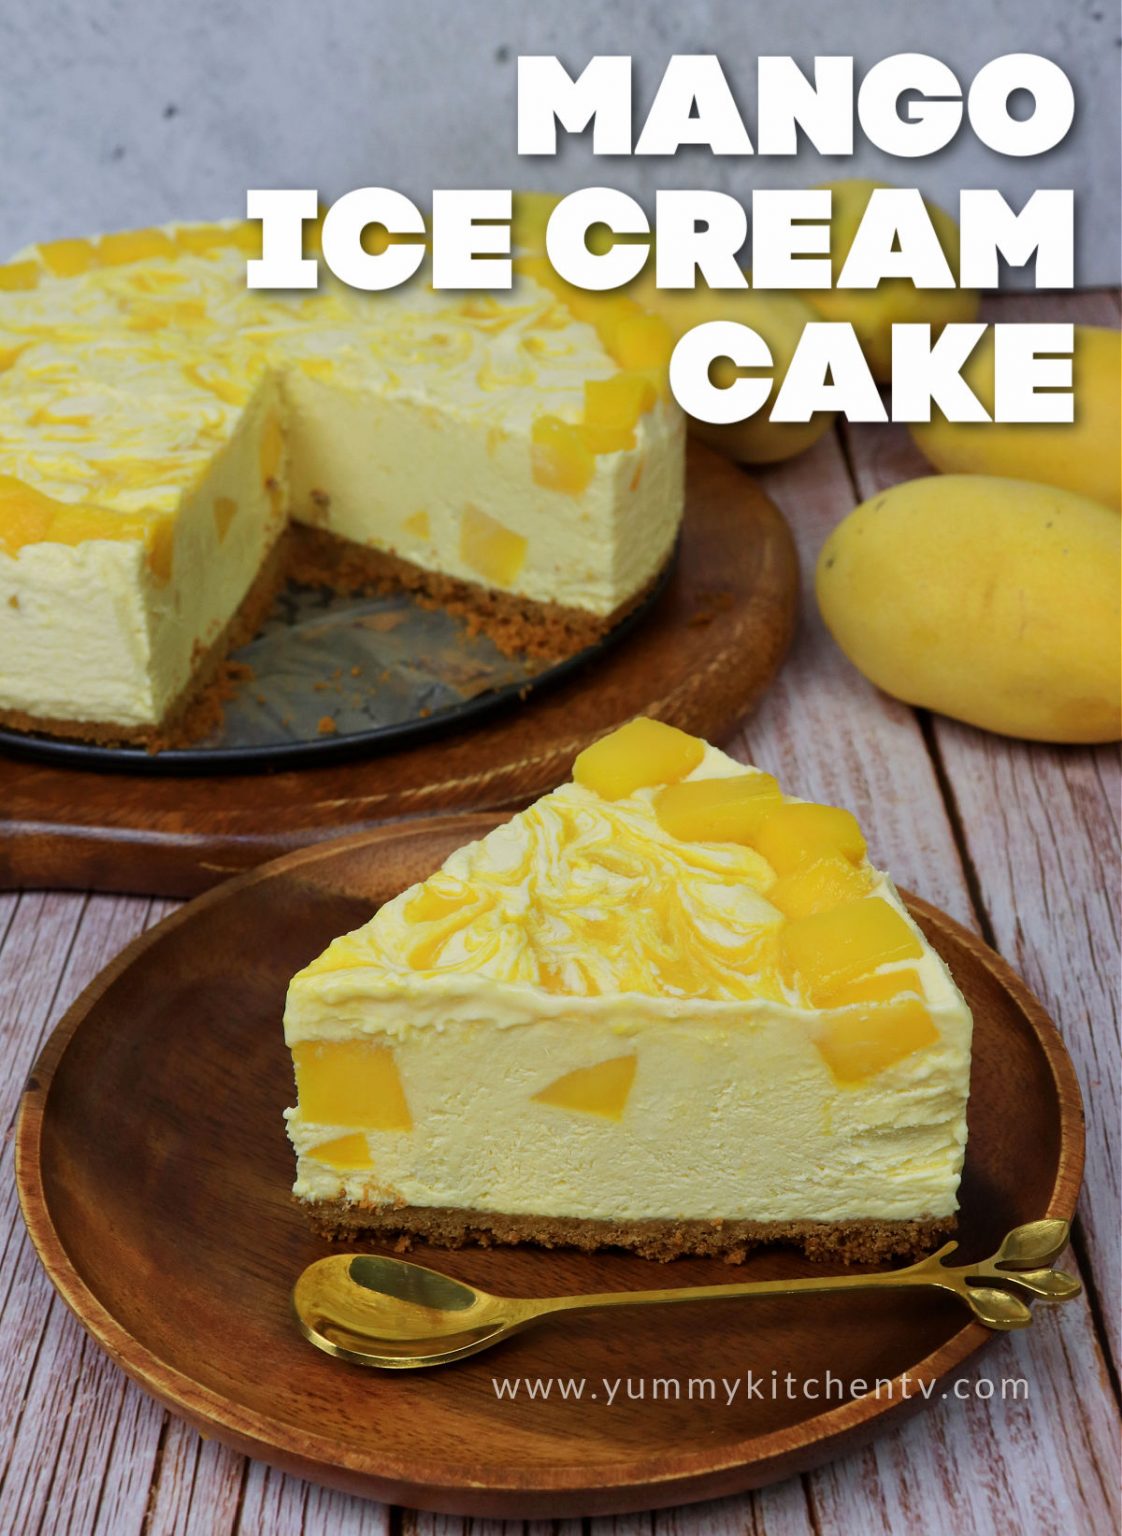 Mango Ice Cream Cake - Yummy Kitchen